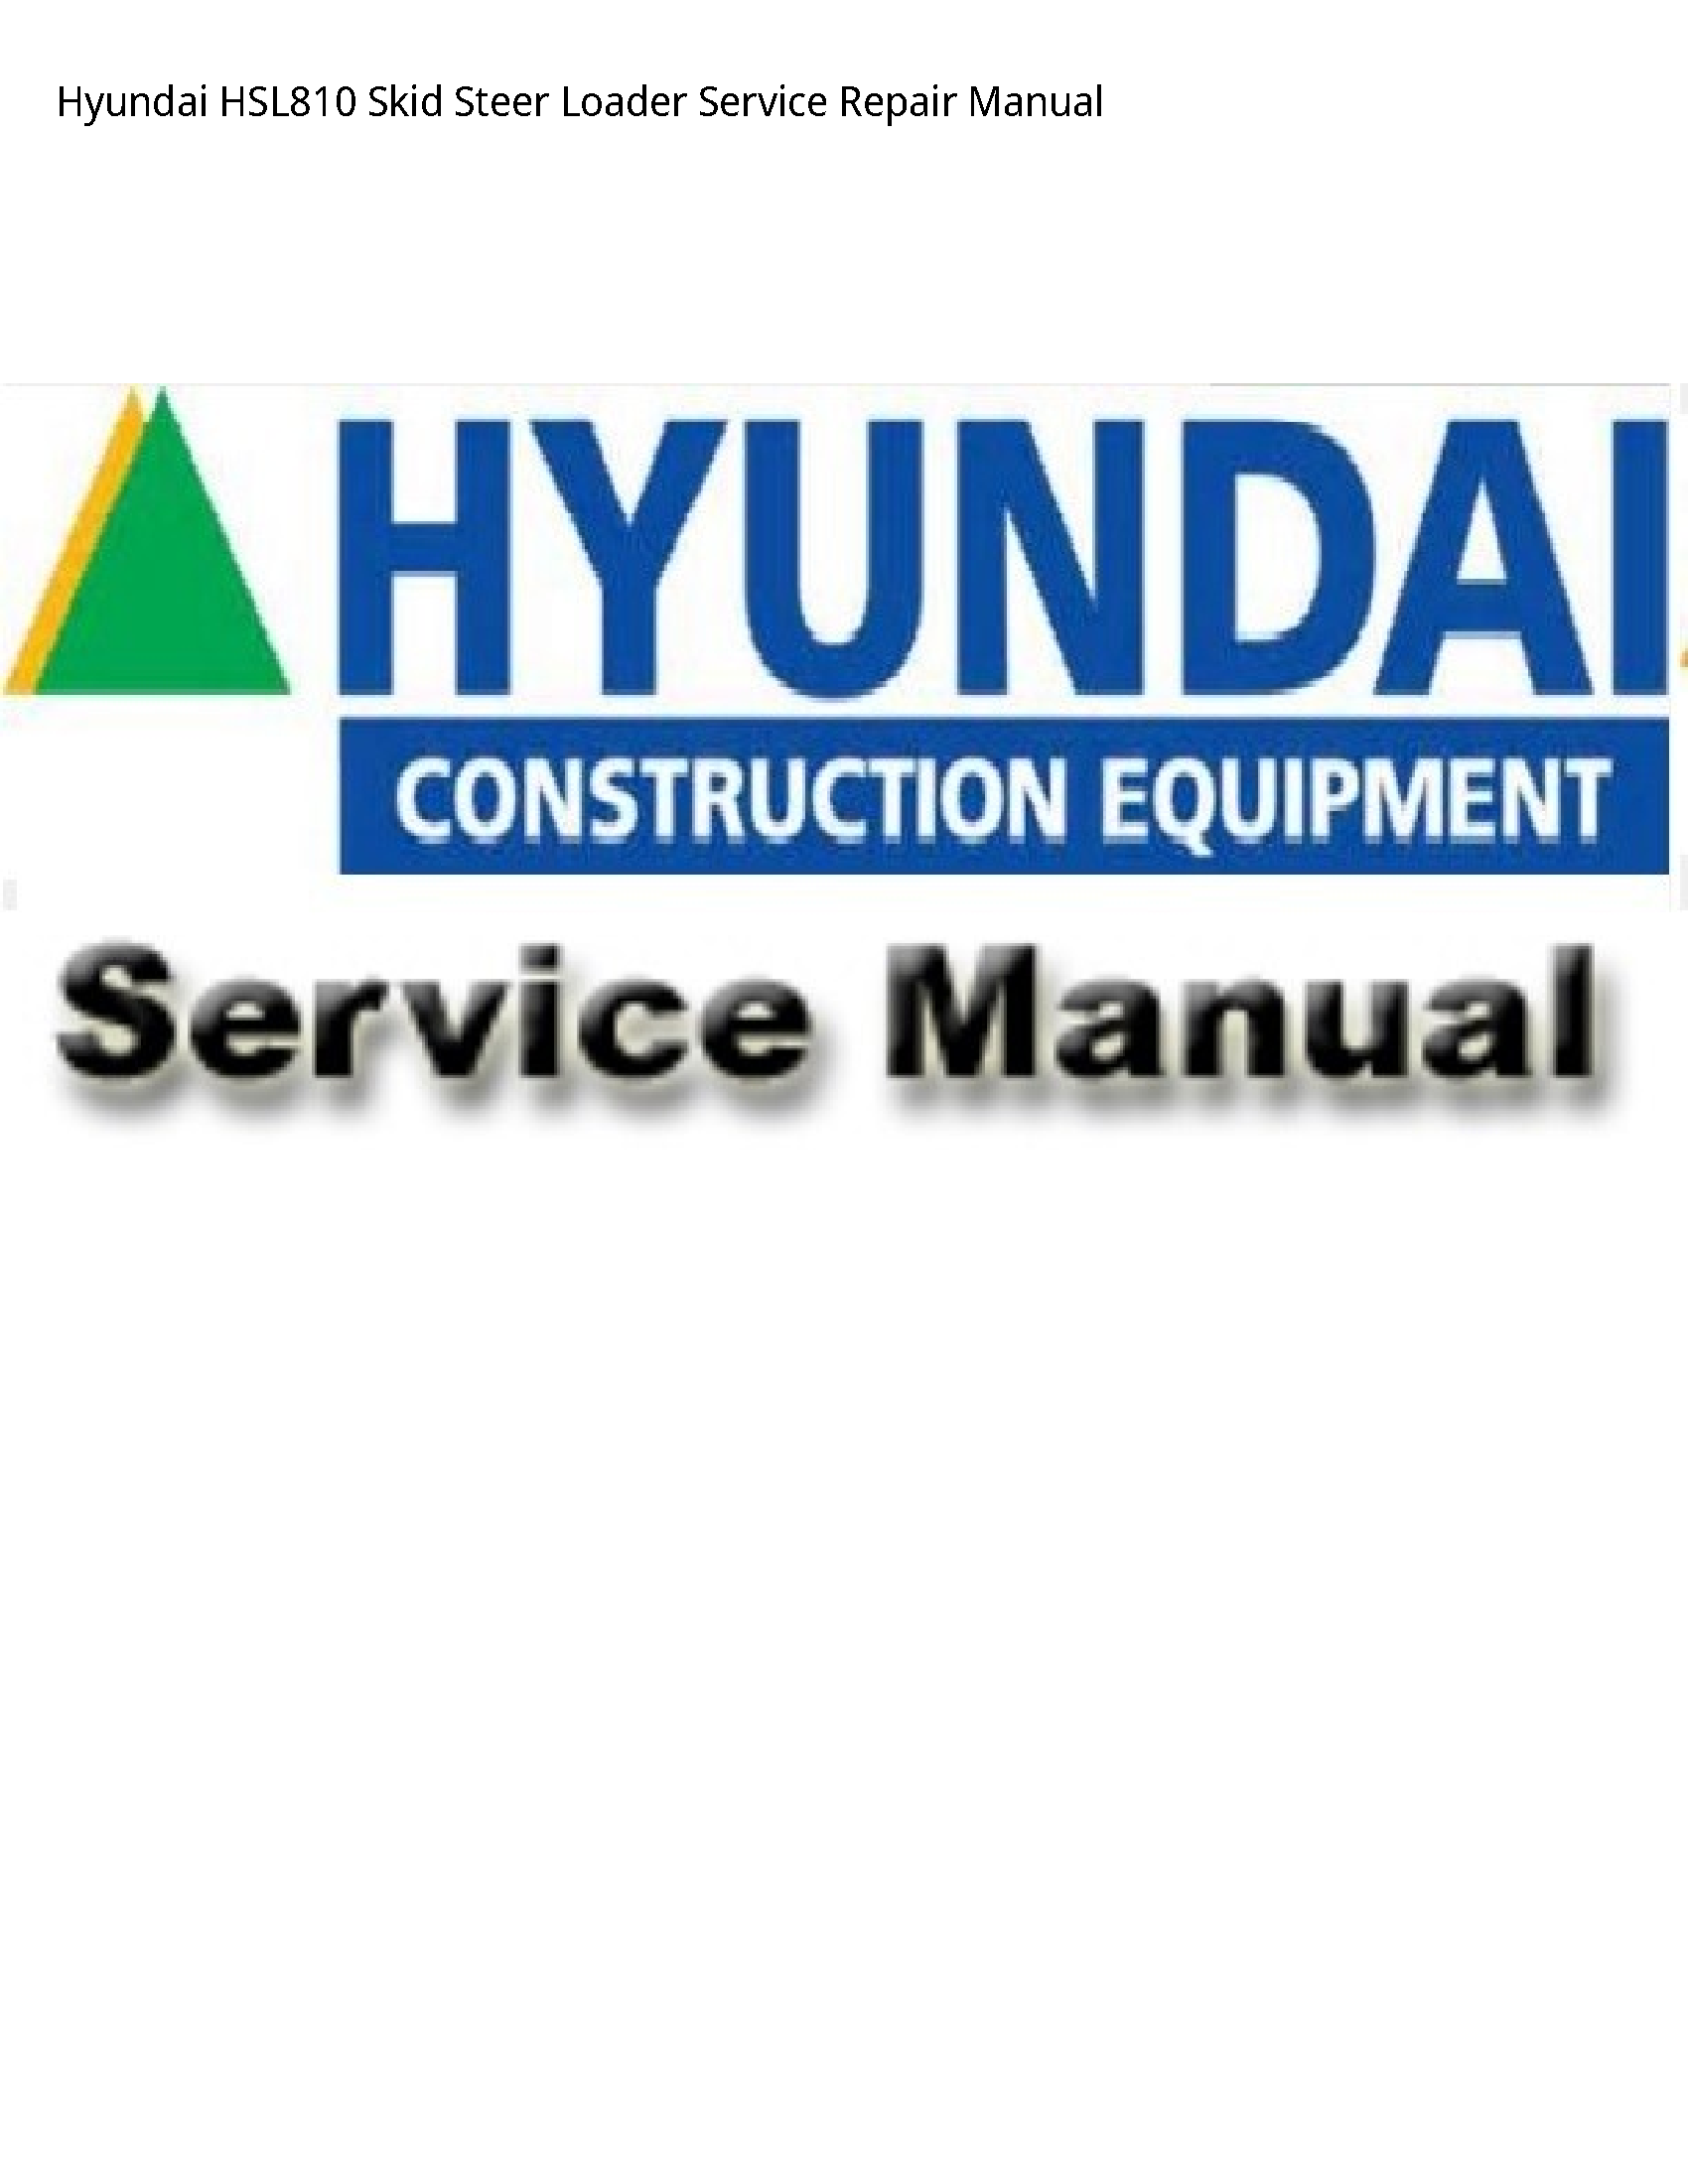 Hyundai HSL810 Skid Steer Loader manual